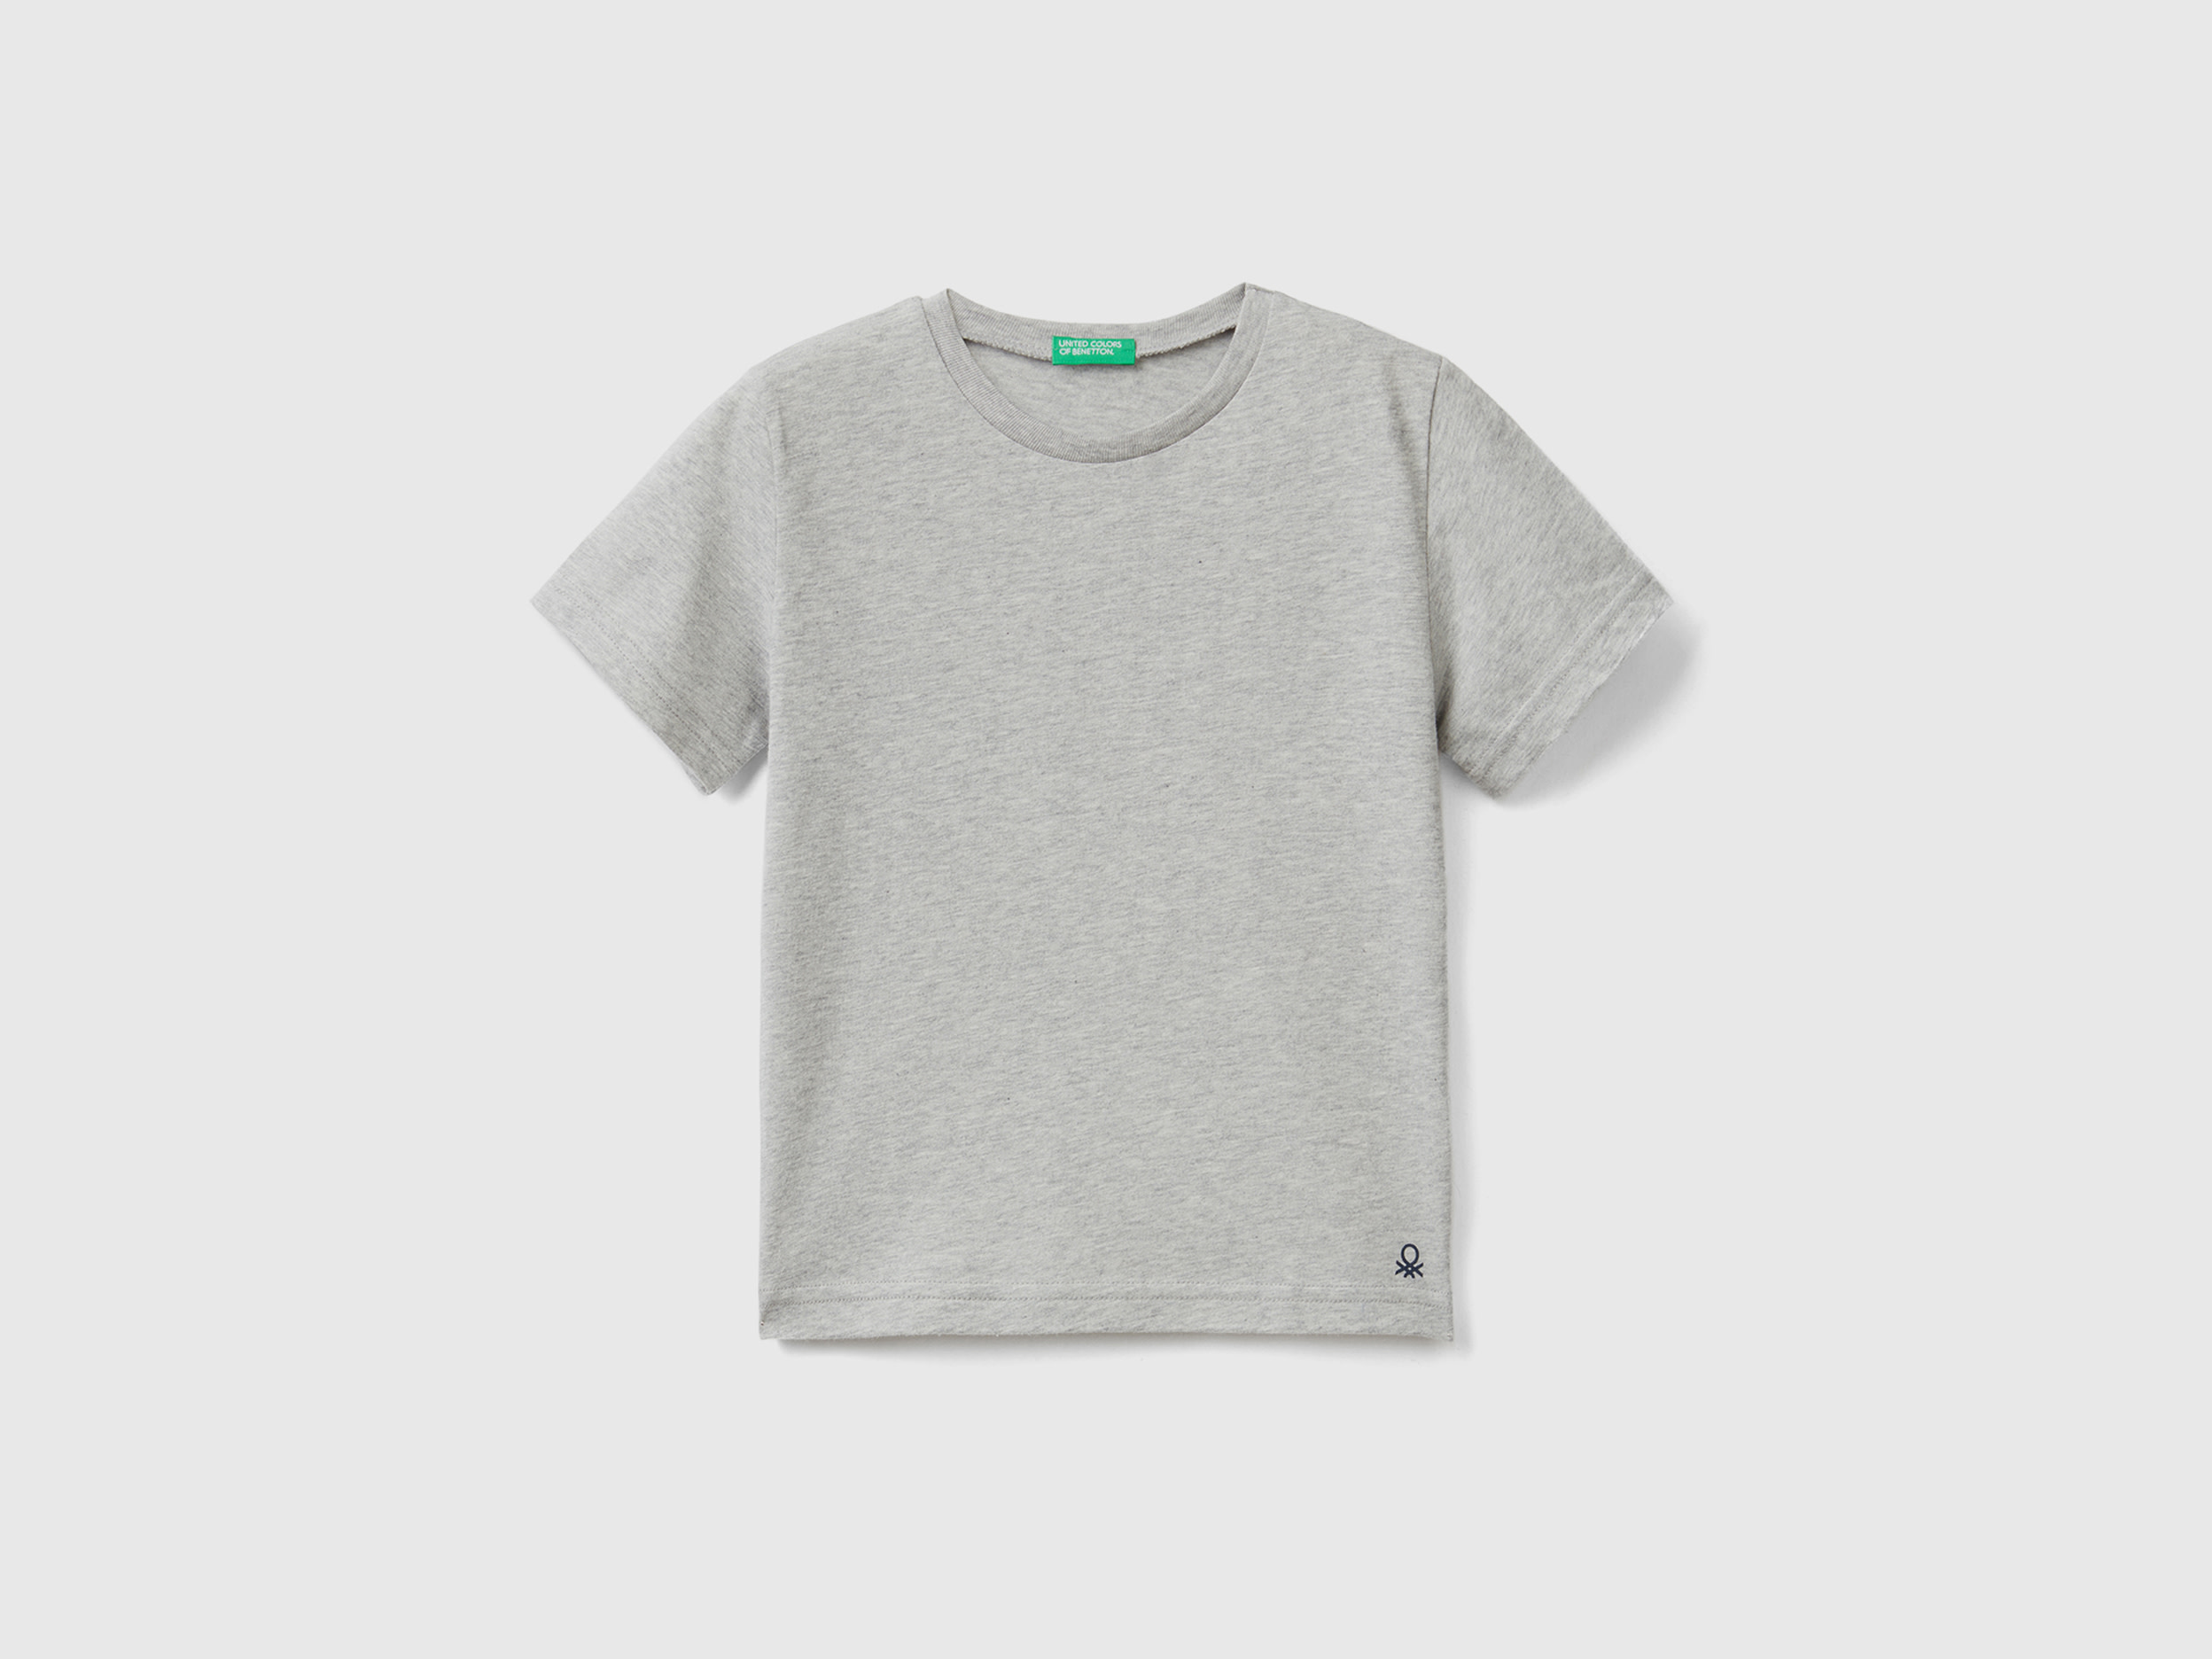 Image of Benetton, T-shirt In Organic Cotton, size 116, Light Gray, Kids